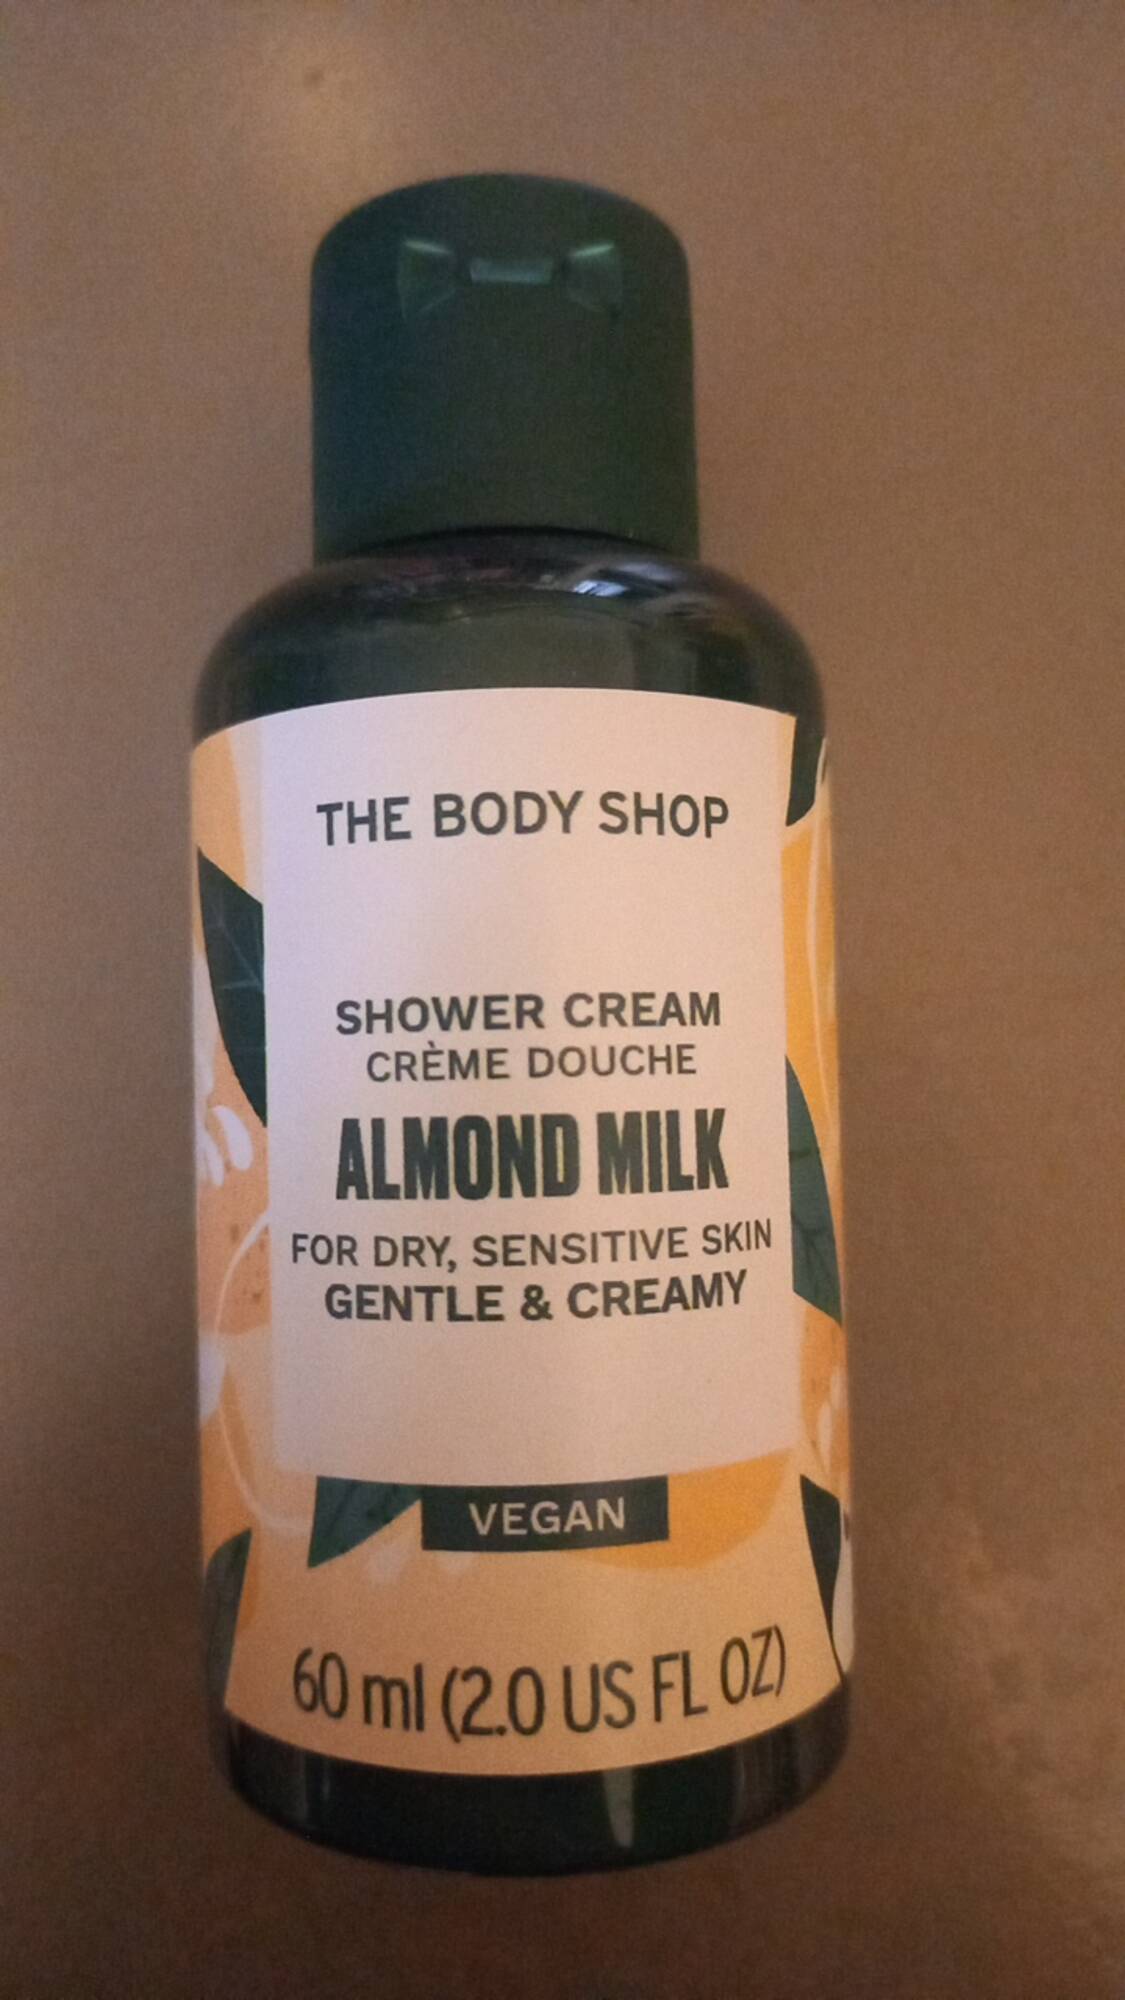 THE BODY SHOP - Almond Milk - Crème douche 